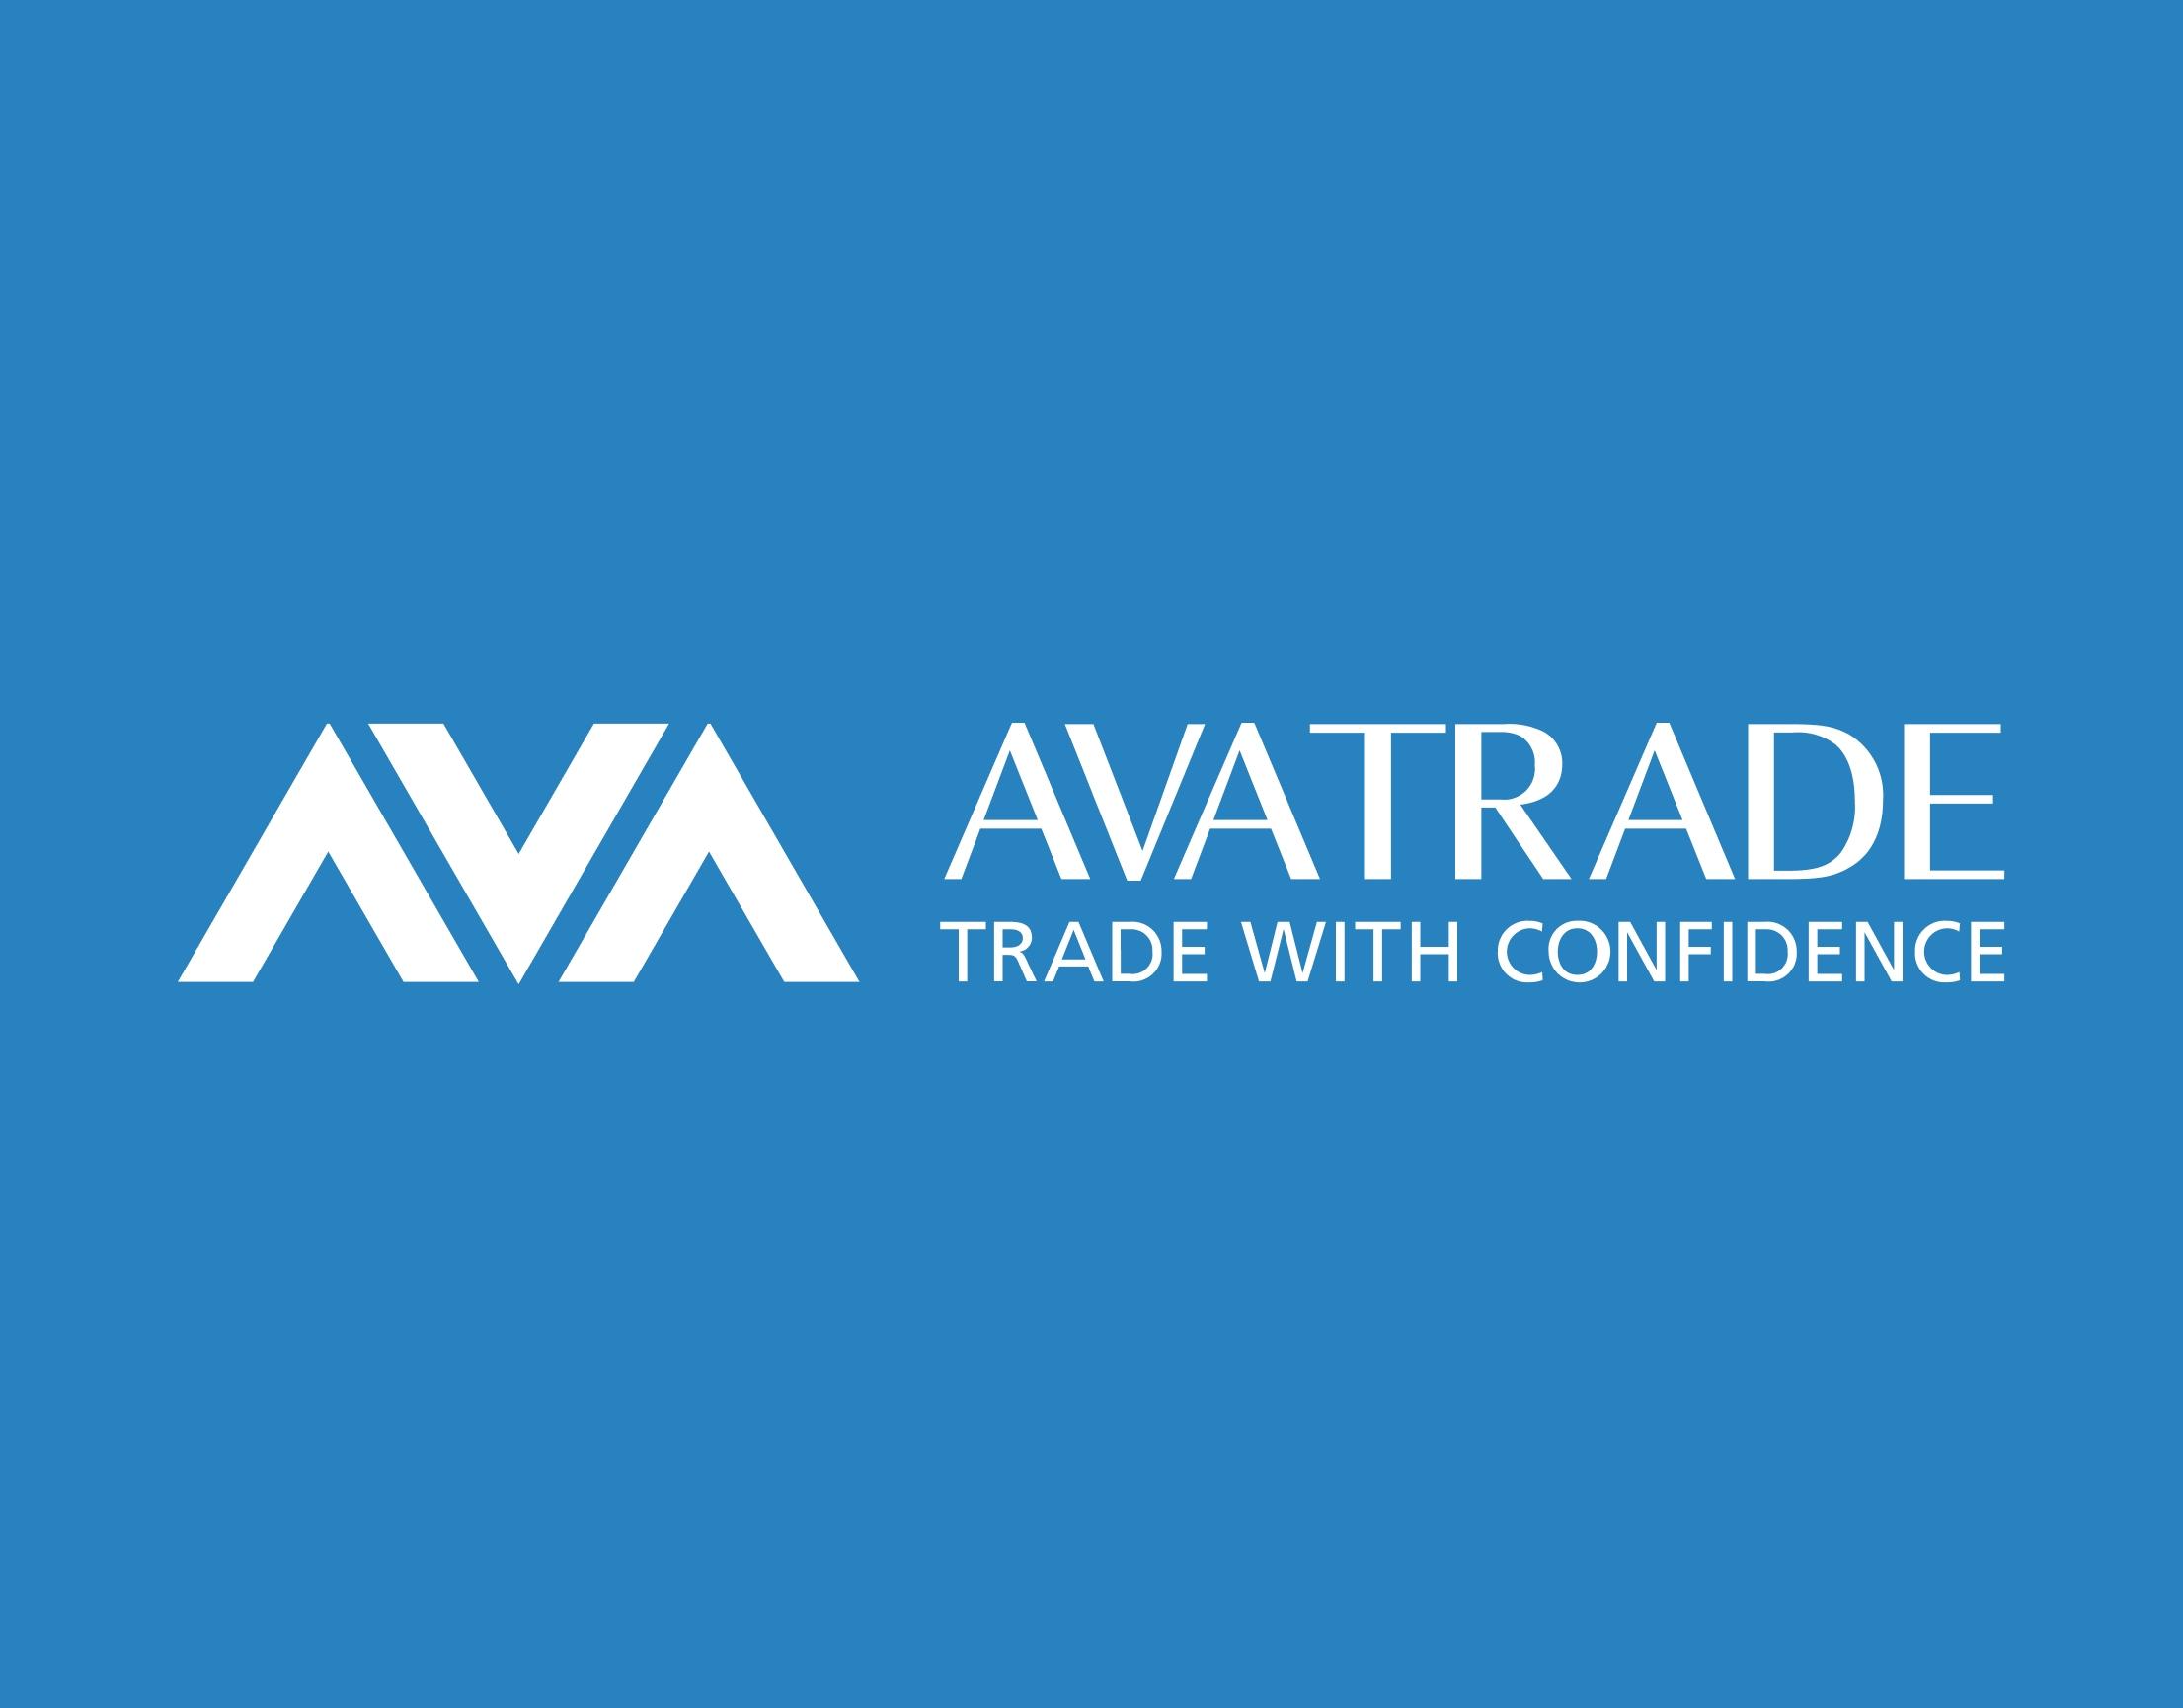 AvaTrade has extended its partnership with Aston Martin F1 Team